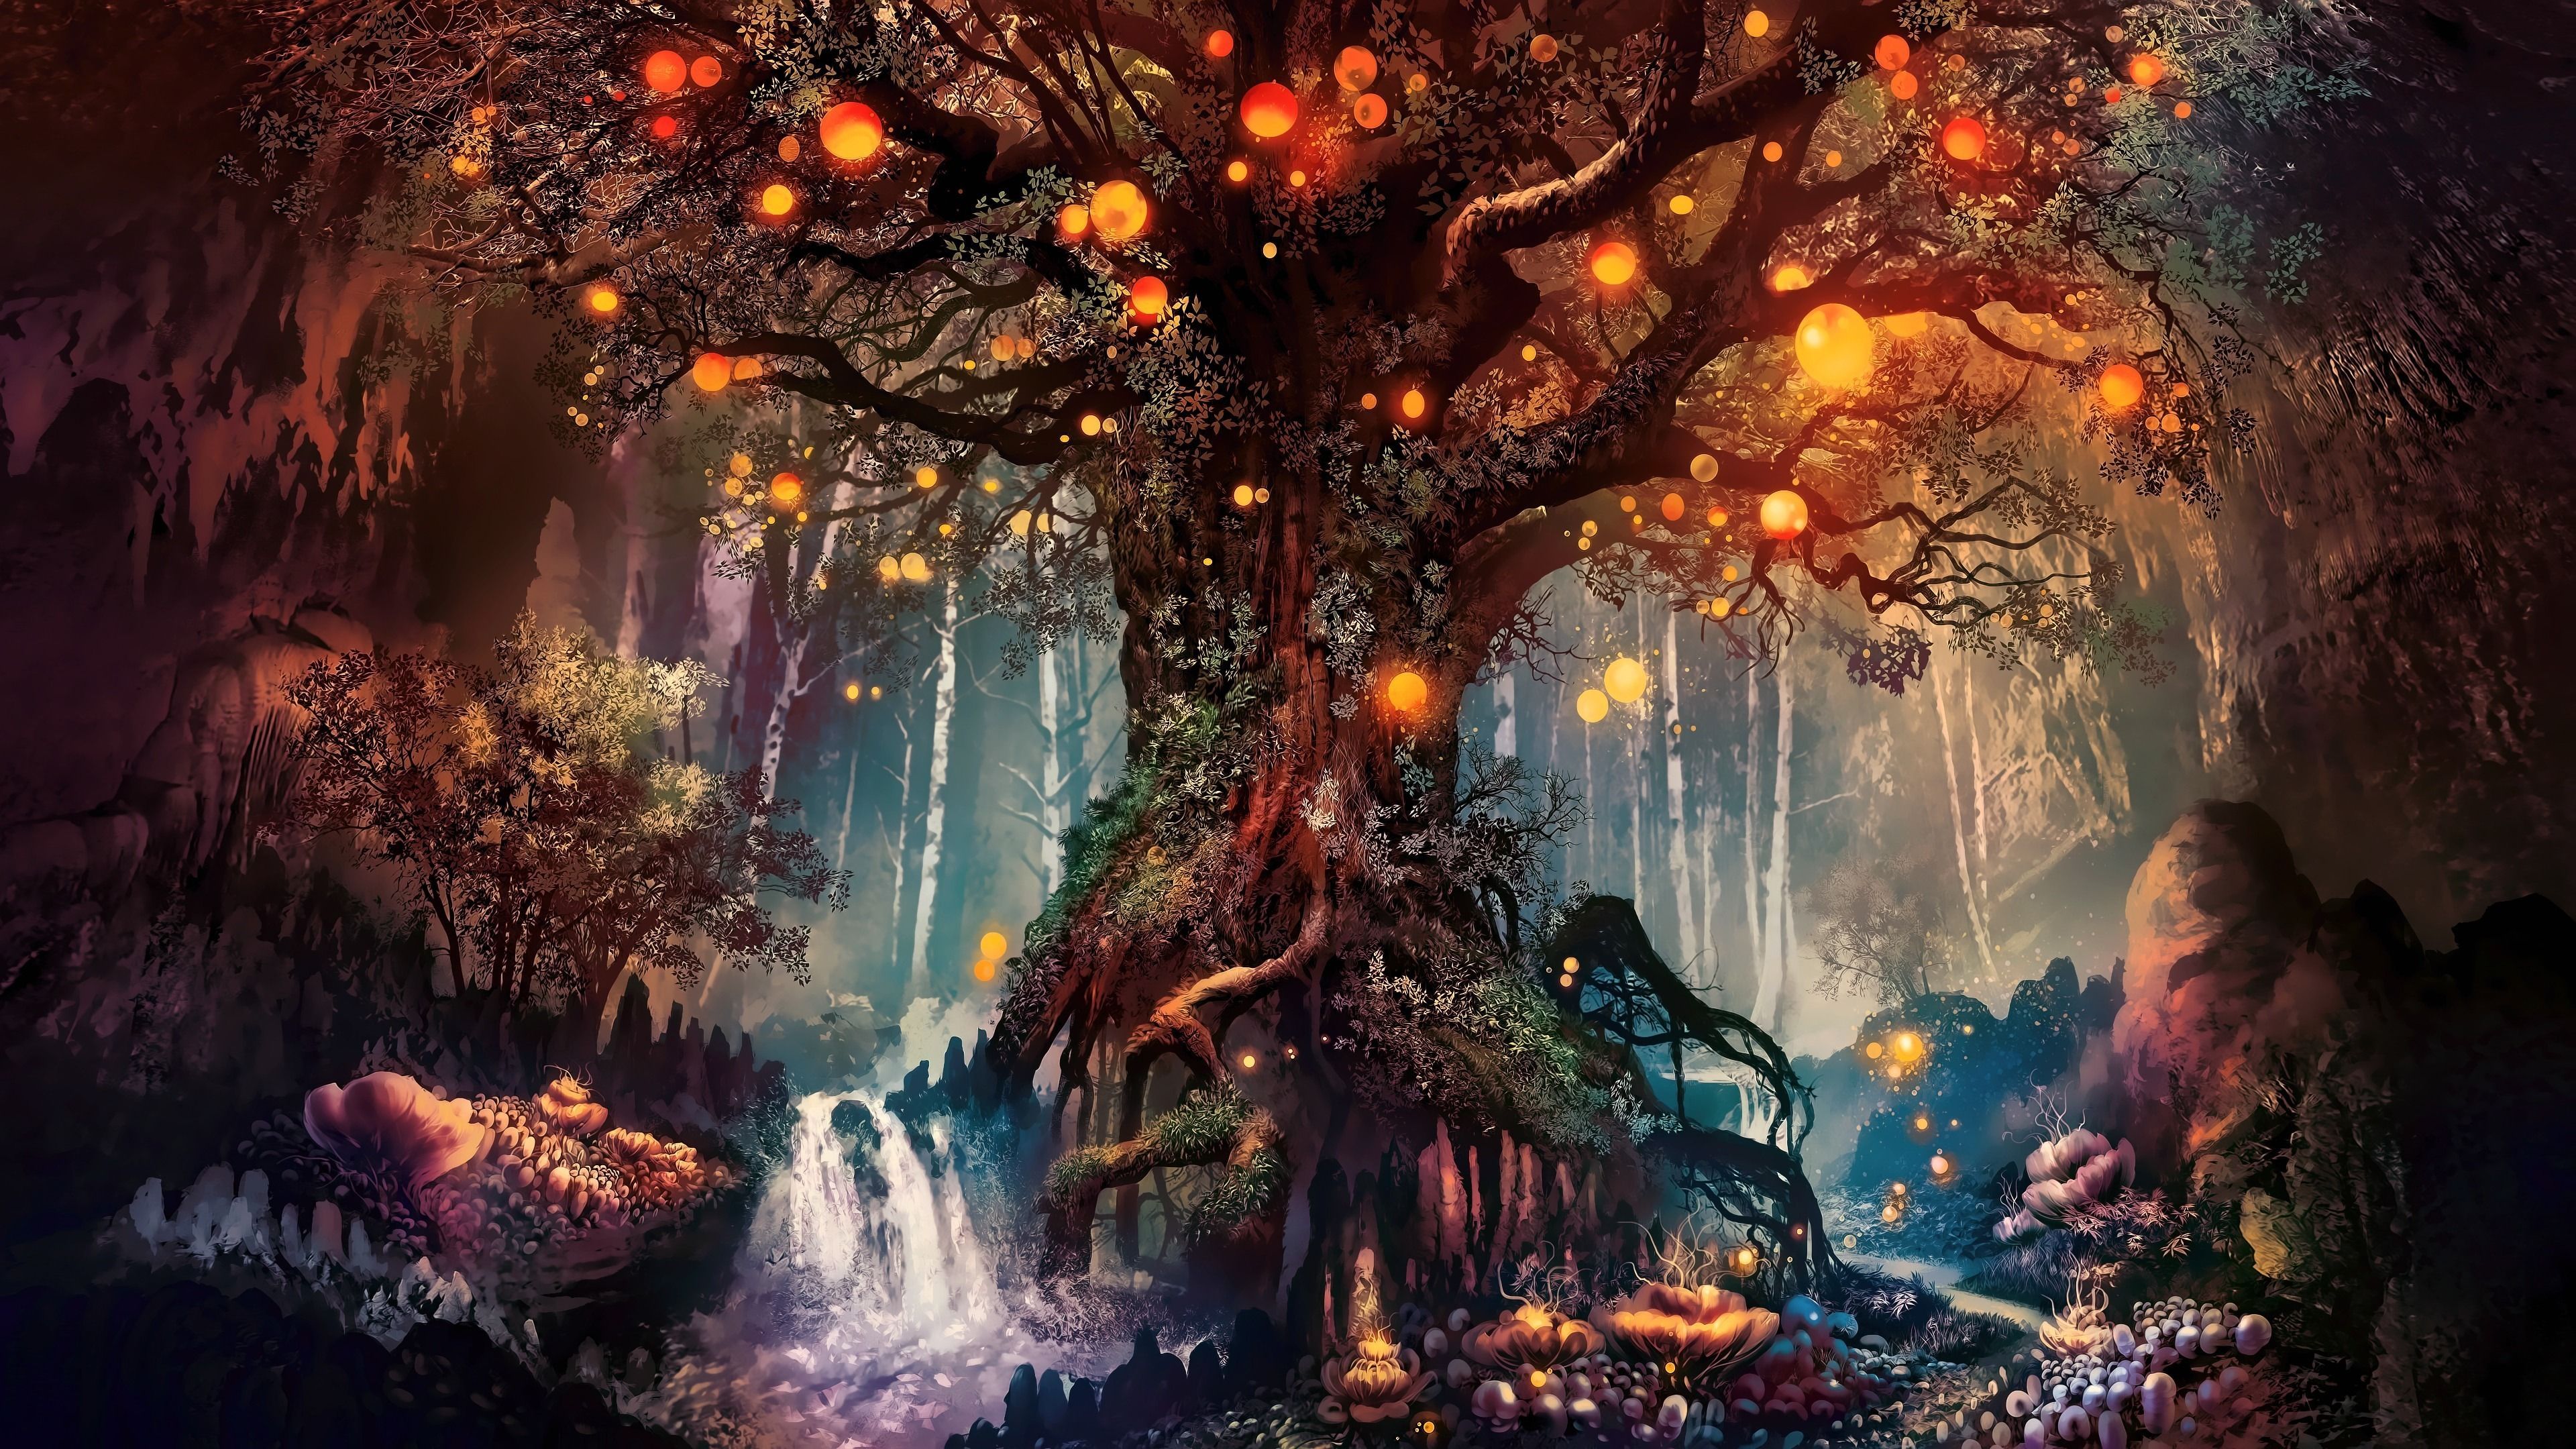 Download 3840x2160 wallpaper old tree, fantasy, art, 4k, uhd 16: widescreen, 3840x2160 HD image, background, x1200 wallpaper, Fantasy artwork, Fantasy tree